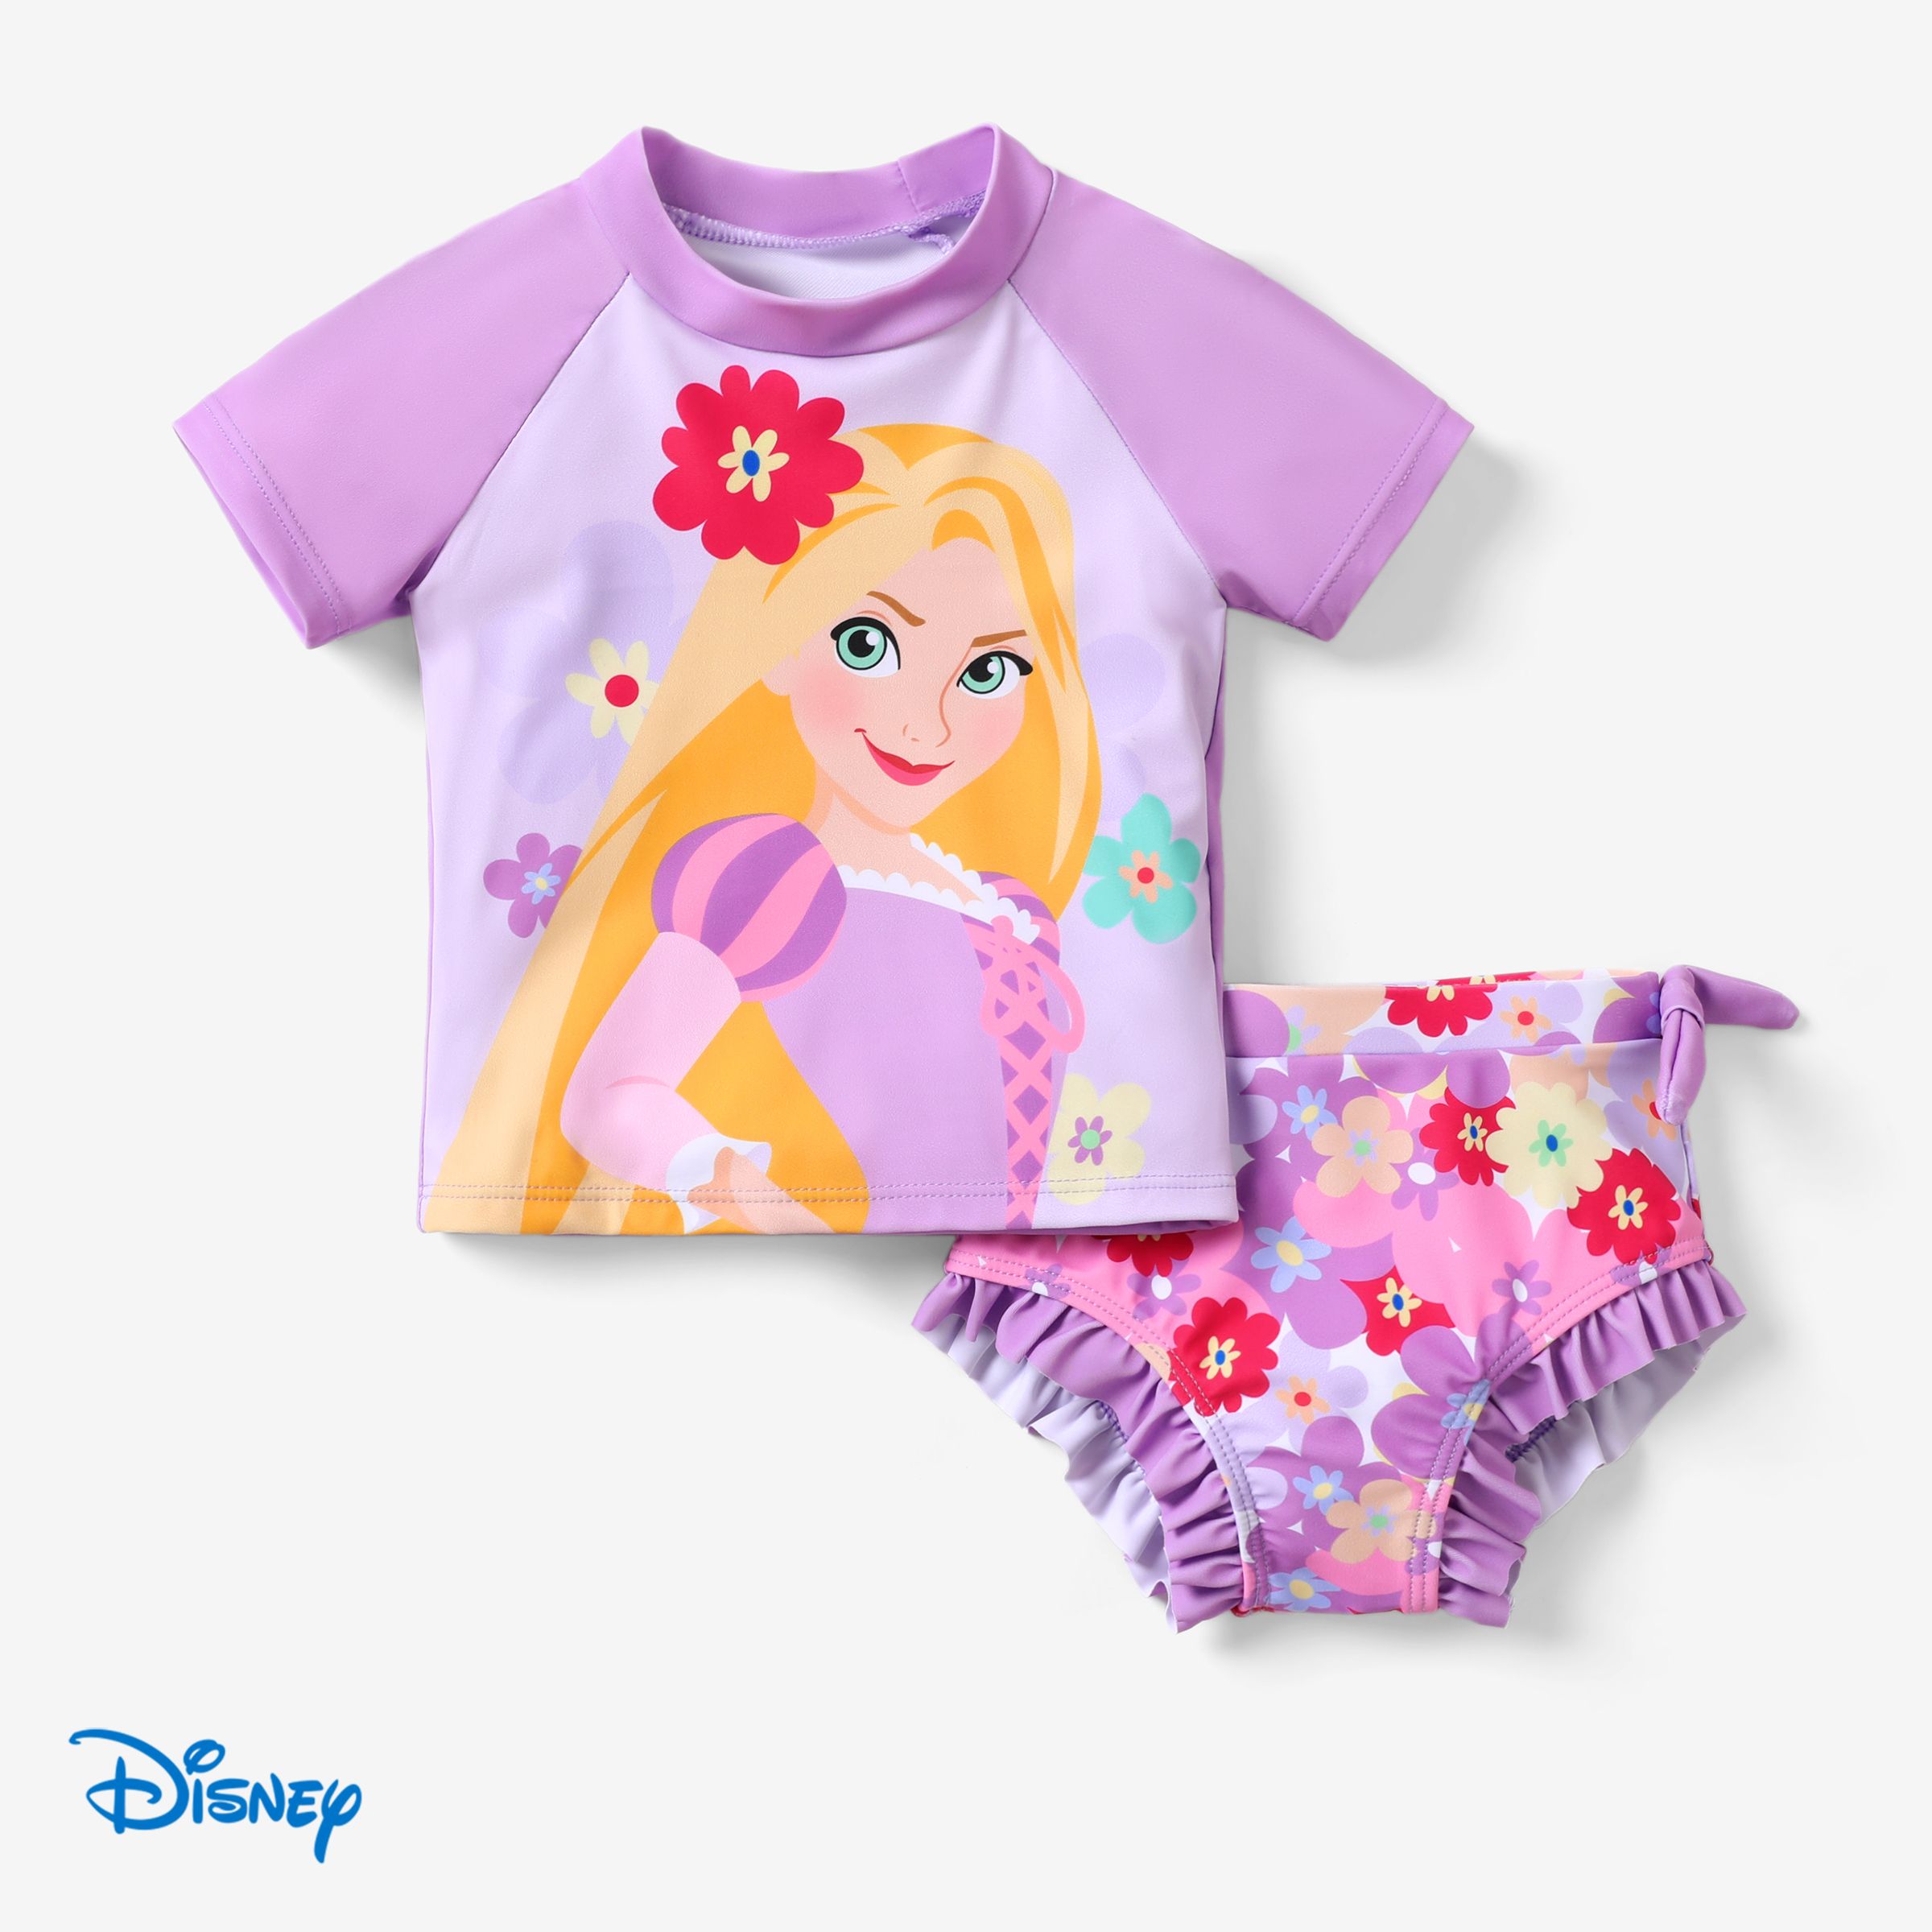 Disney Princess Toddler Girls Ariel Merimaid Swimsuit